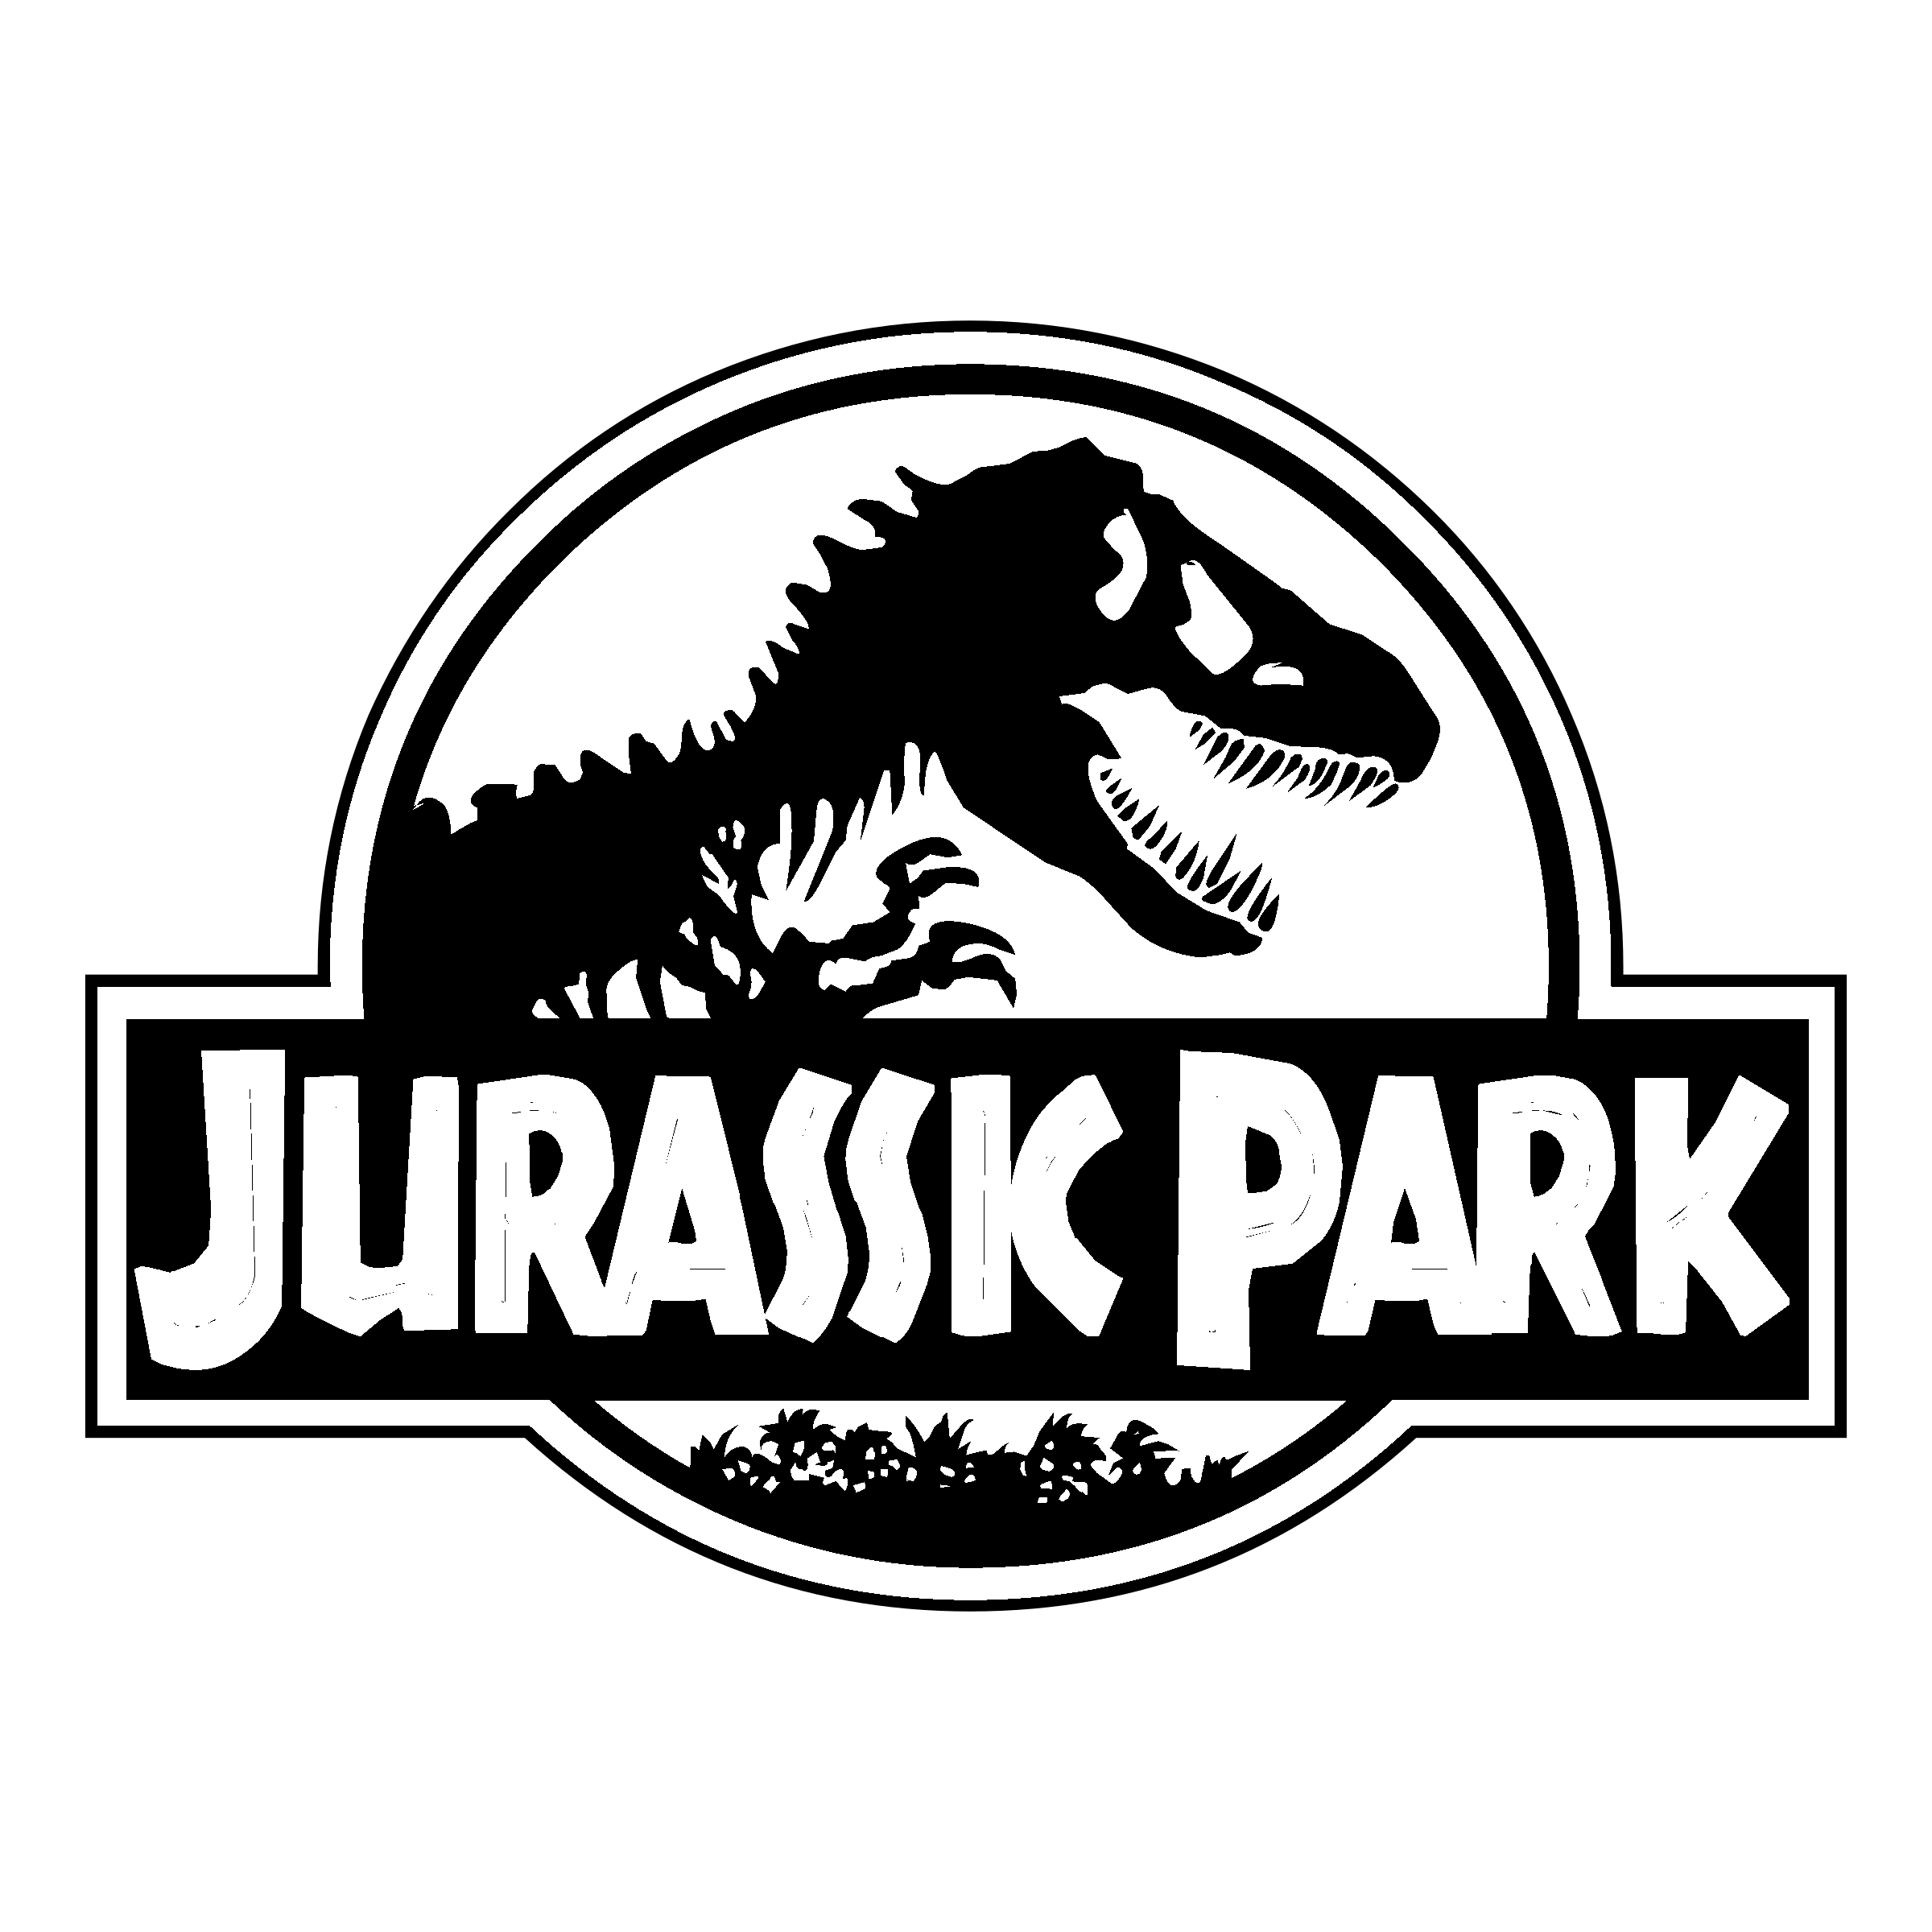 Jurassic Park Logo - Jurassic Park Logo PNG Transparent & SVG Vector - Freebie Supply